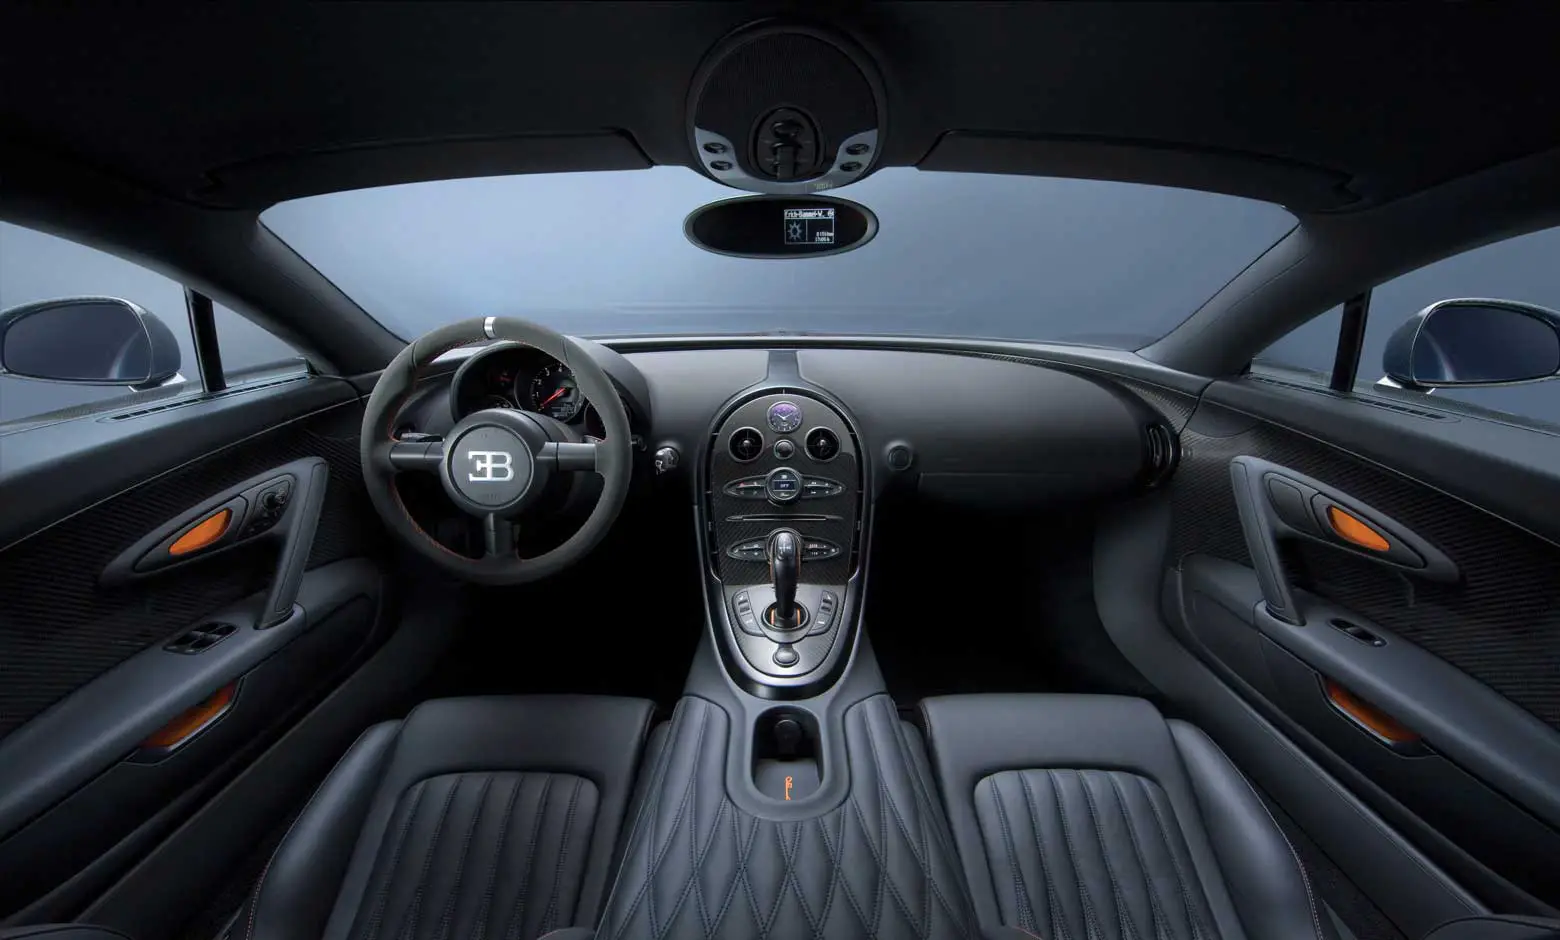 Bugatti Veyron 16 4 Super Sport Interior Image Gallery, Pictures, Photos